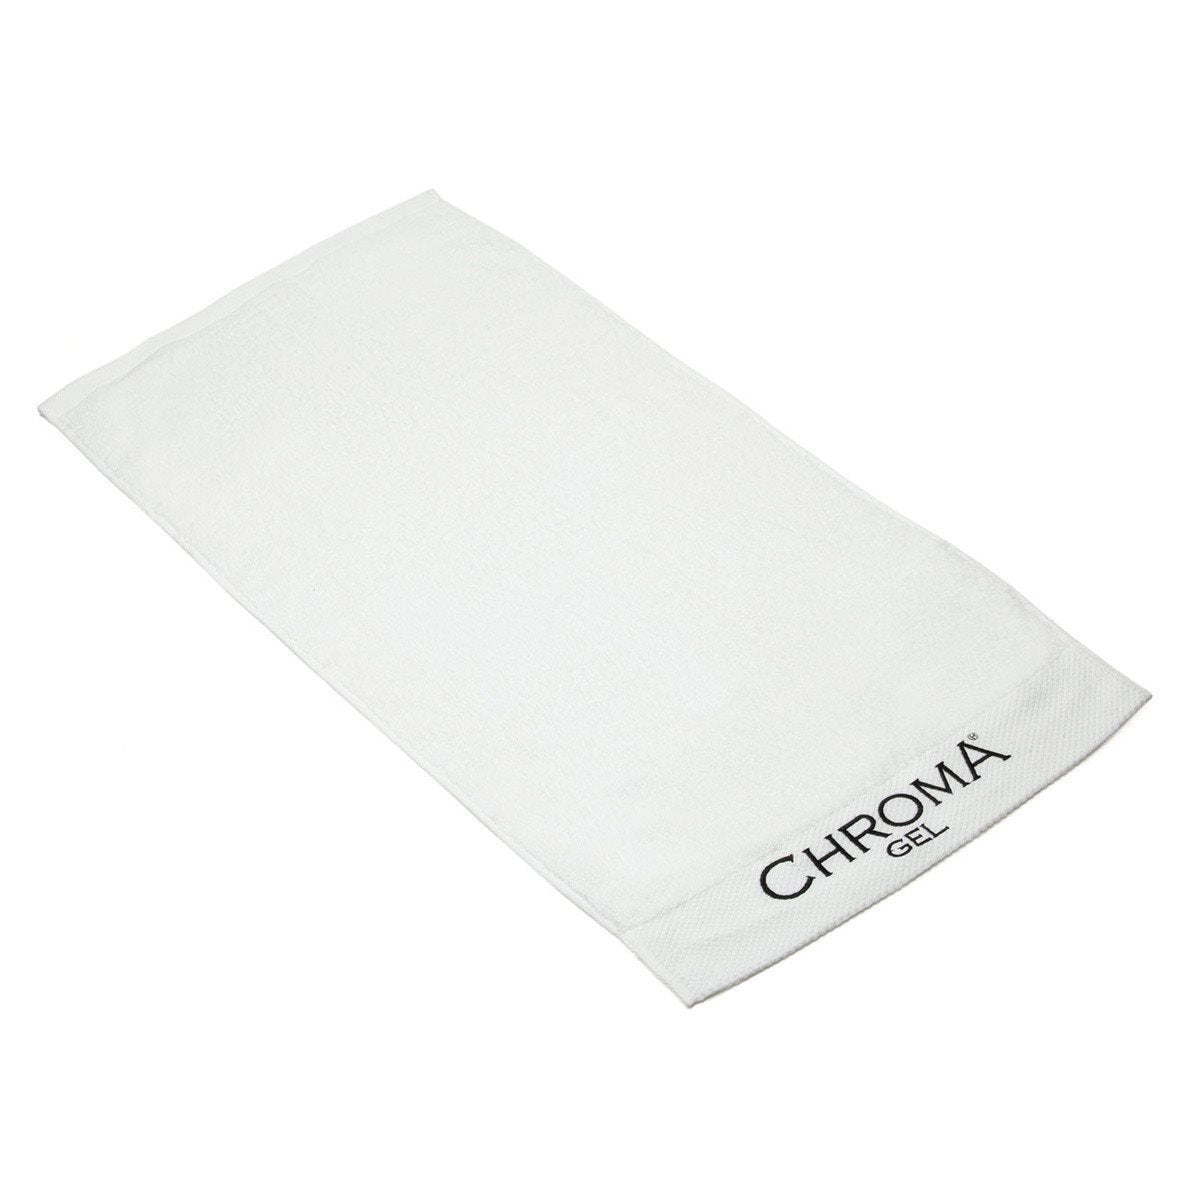 Chroma Gel Manicure Hand Towel - Chroma Gel